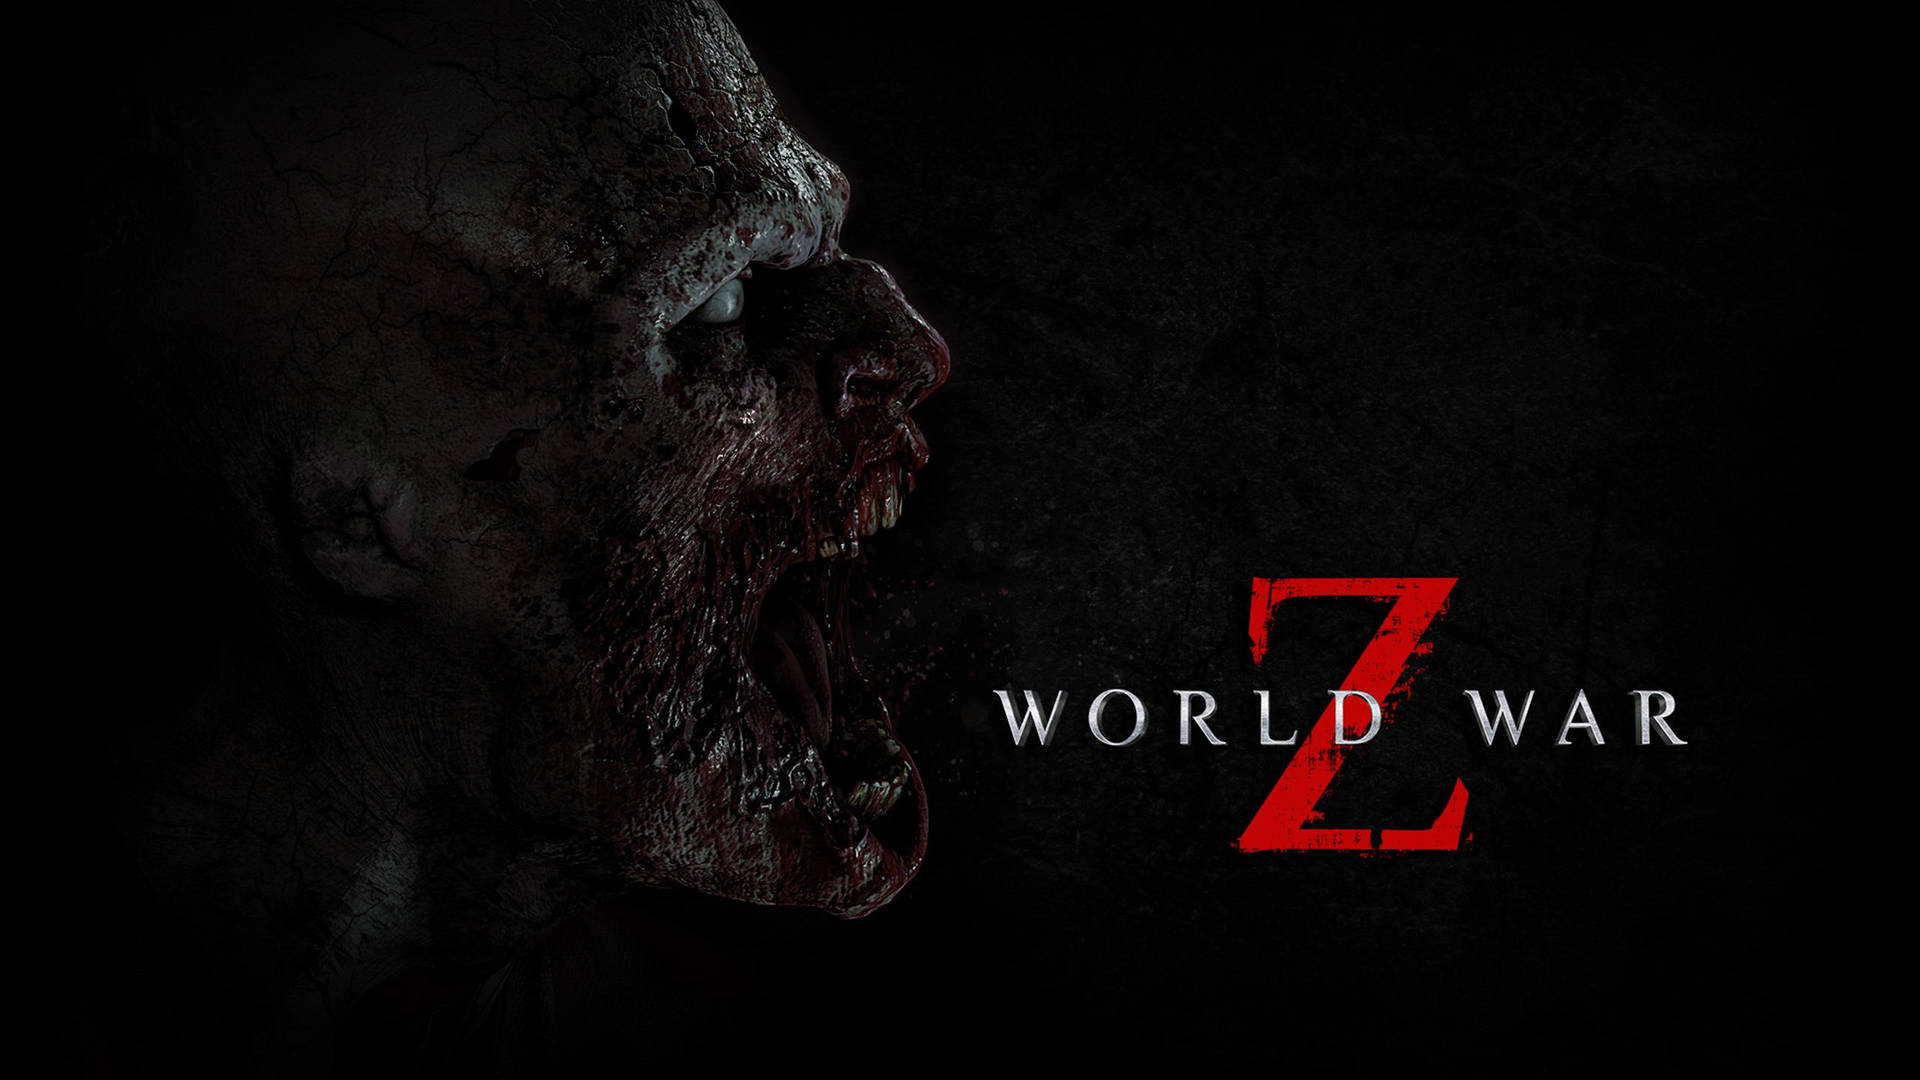 World War Z 4K Zombie Poster Wallpaper